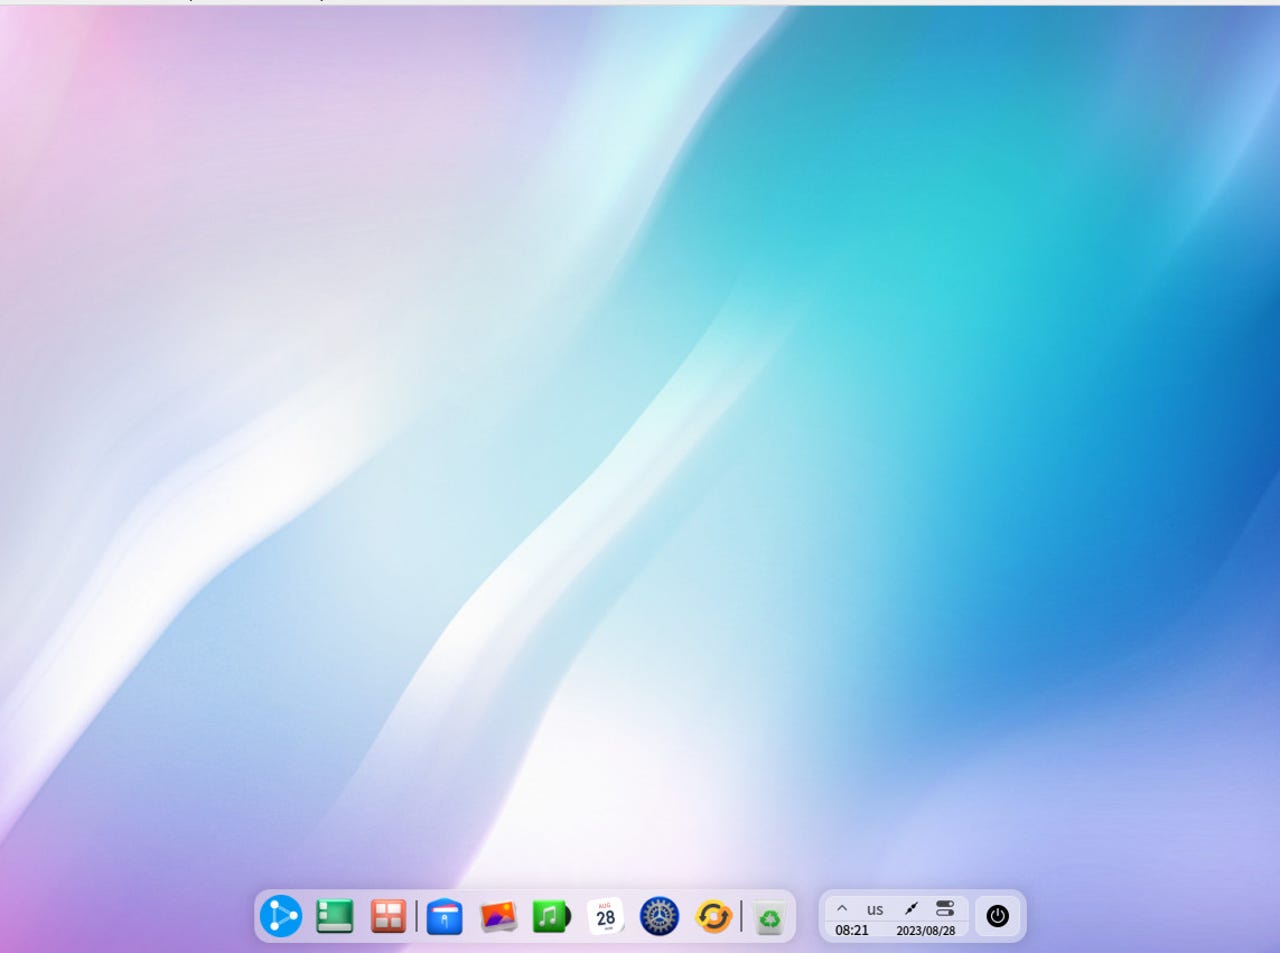 The default UbuntuDDE desktop.